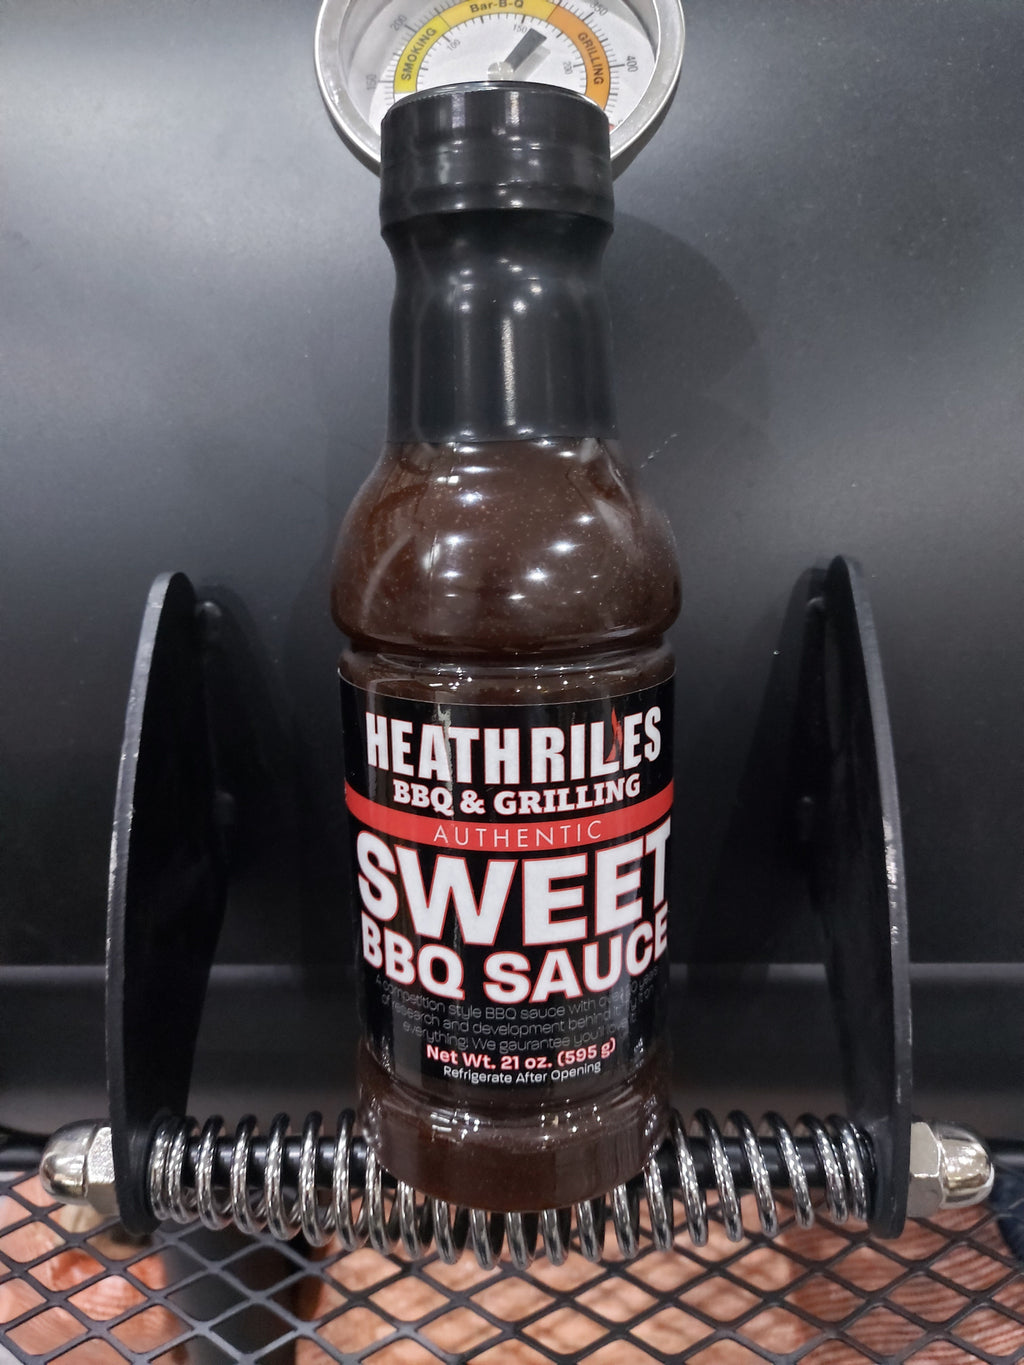 Sweet BBQ Sauce 595g by Heath Riles